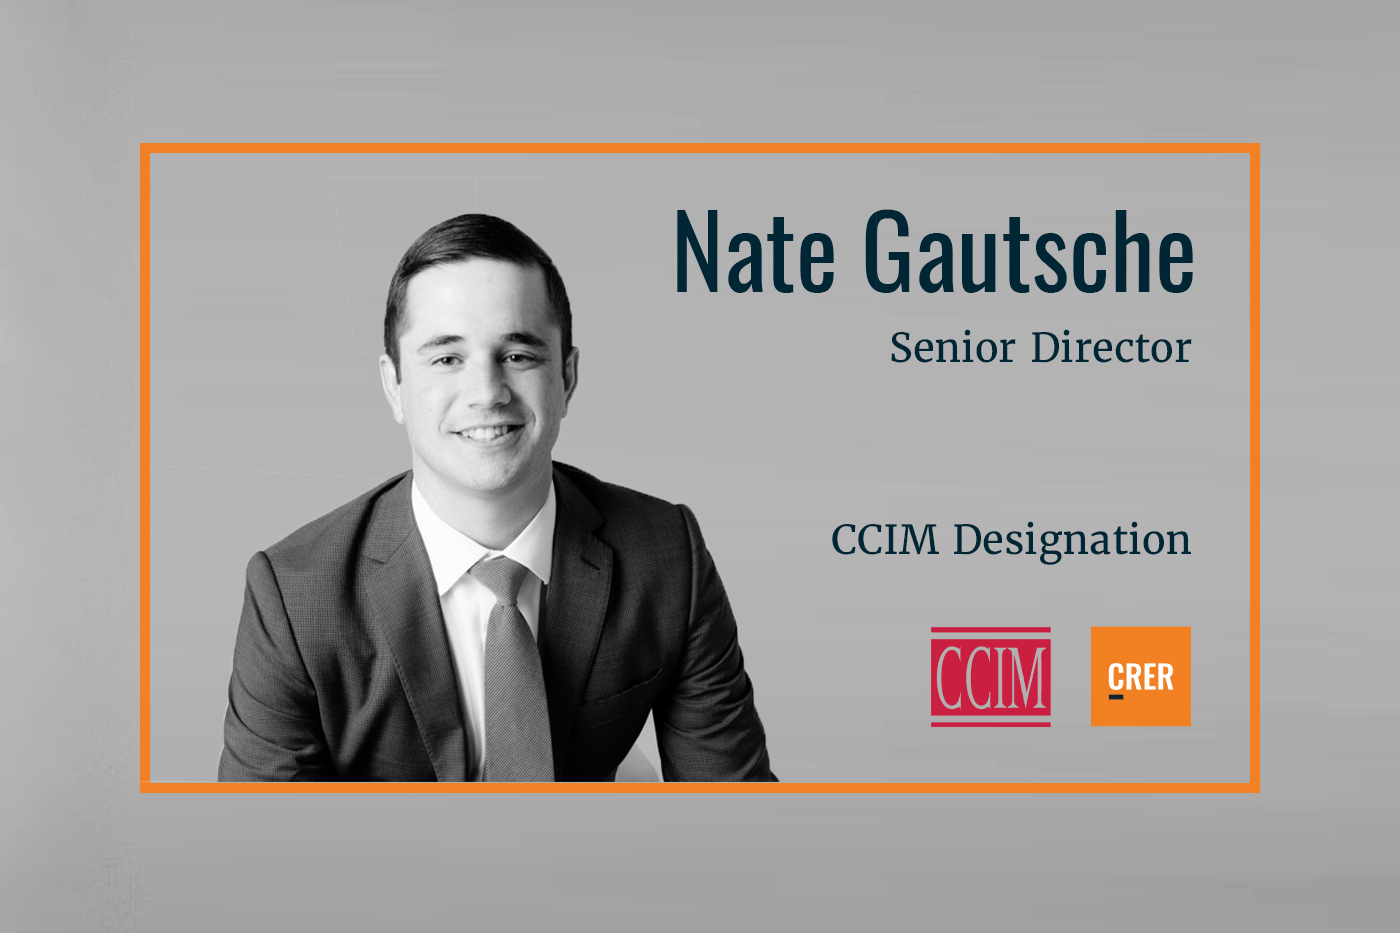 Nate Gautsche Becomes a Member of CCIM